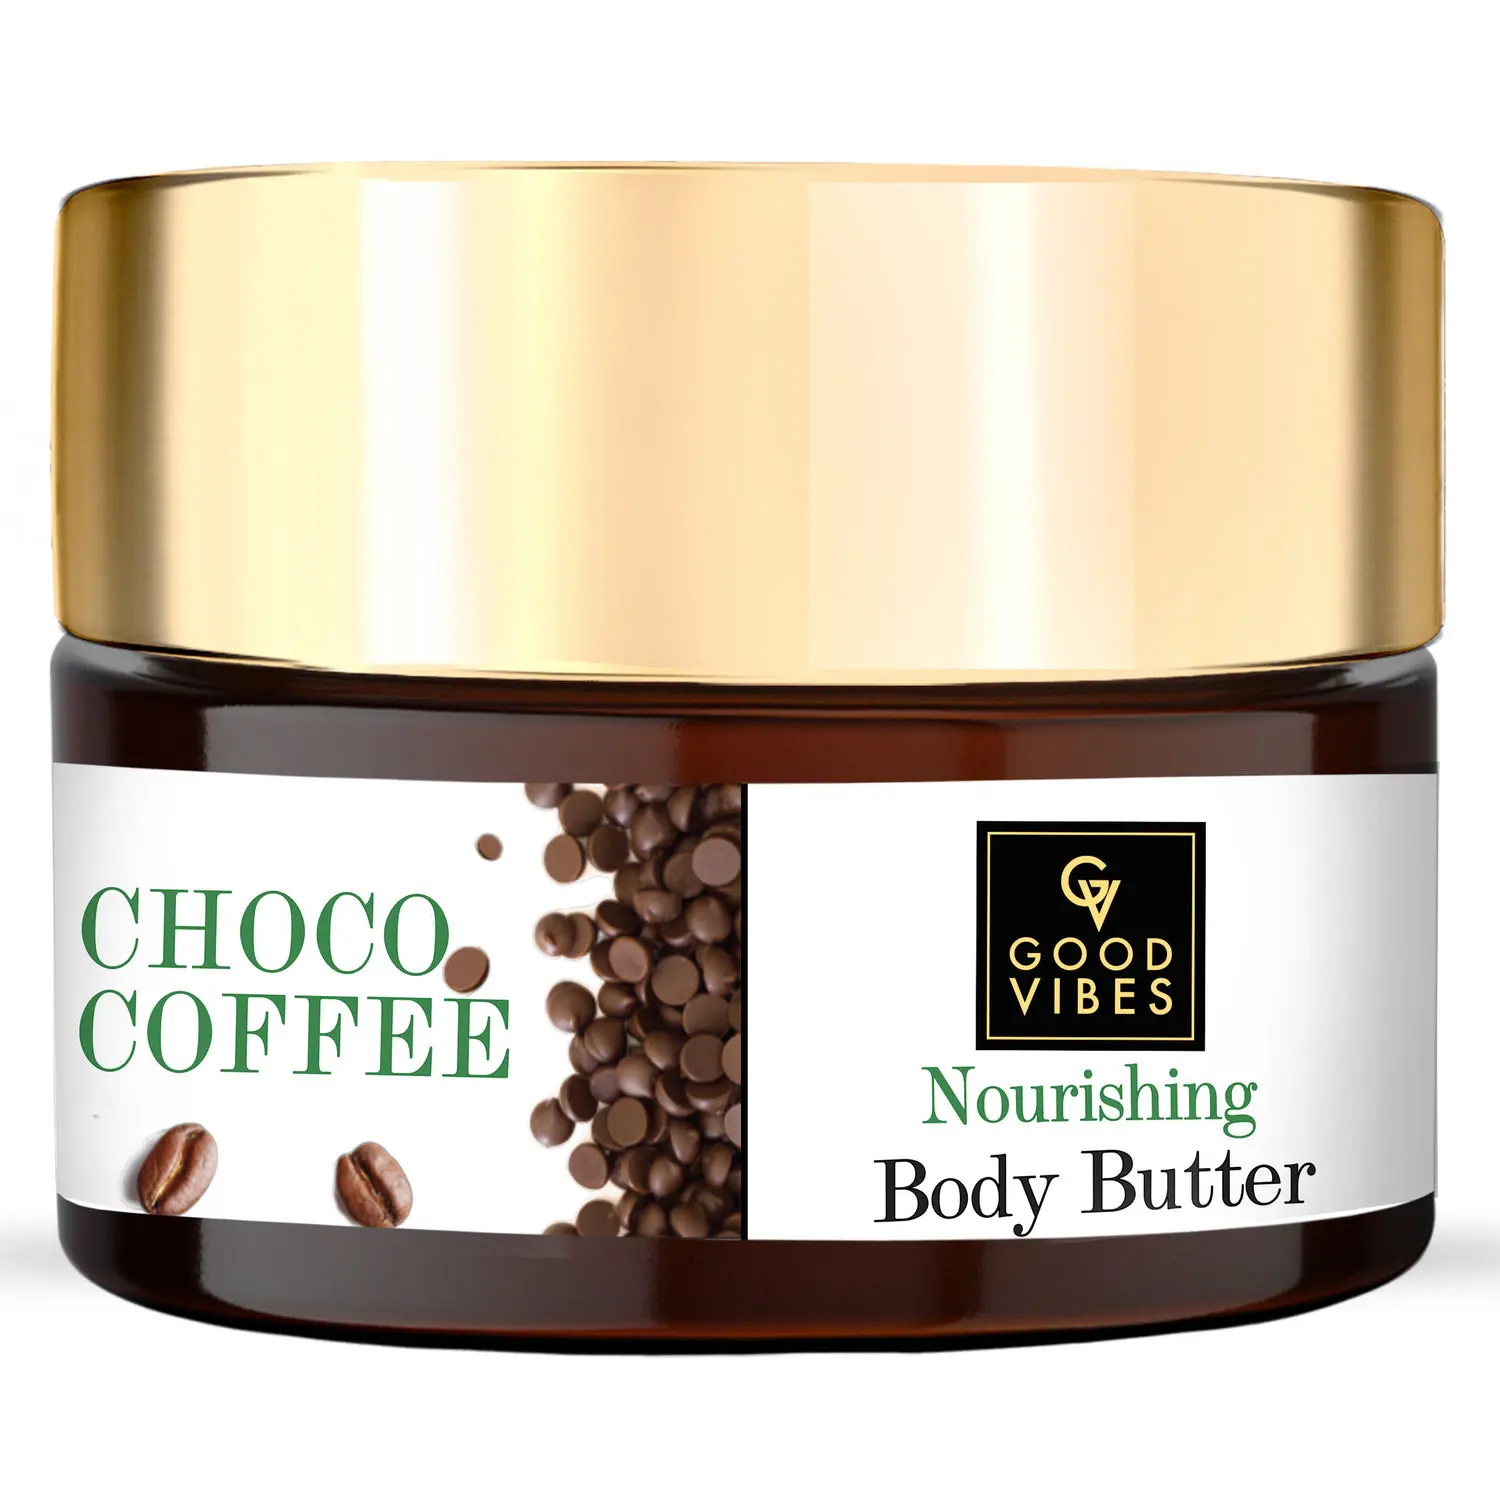 Good Vibes Choco Coffee Nourishing Body Butter (100g)